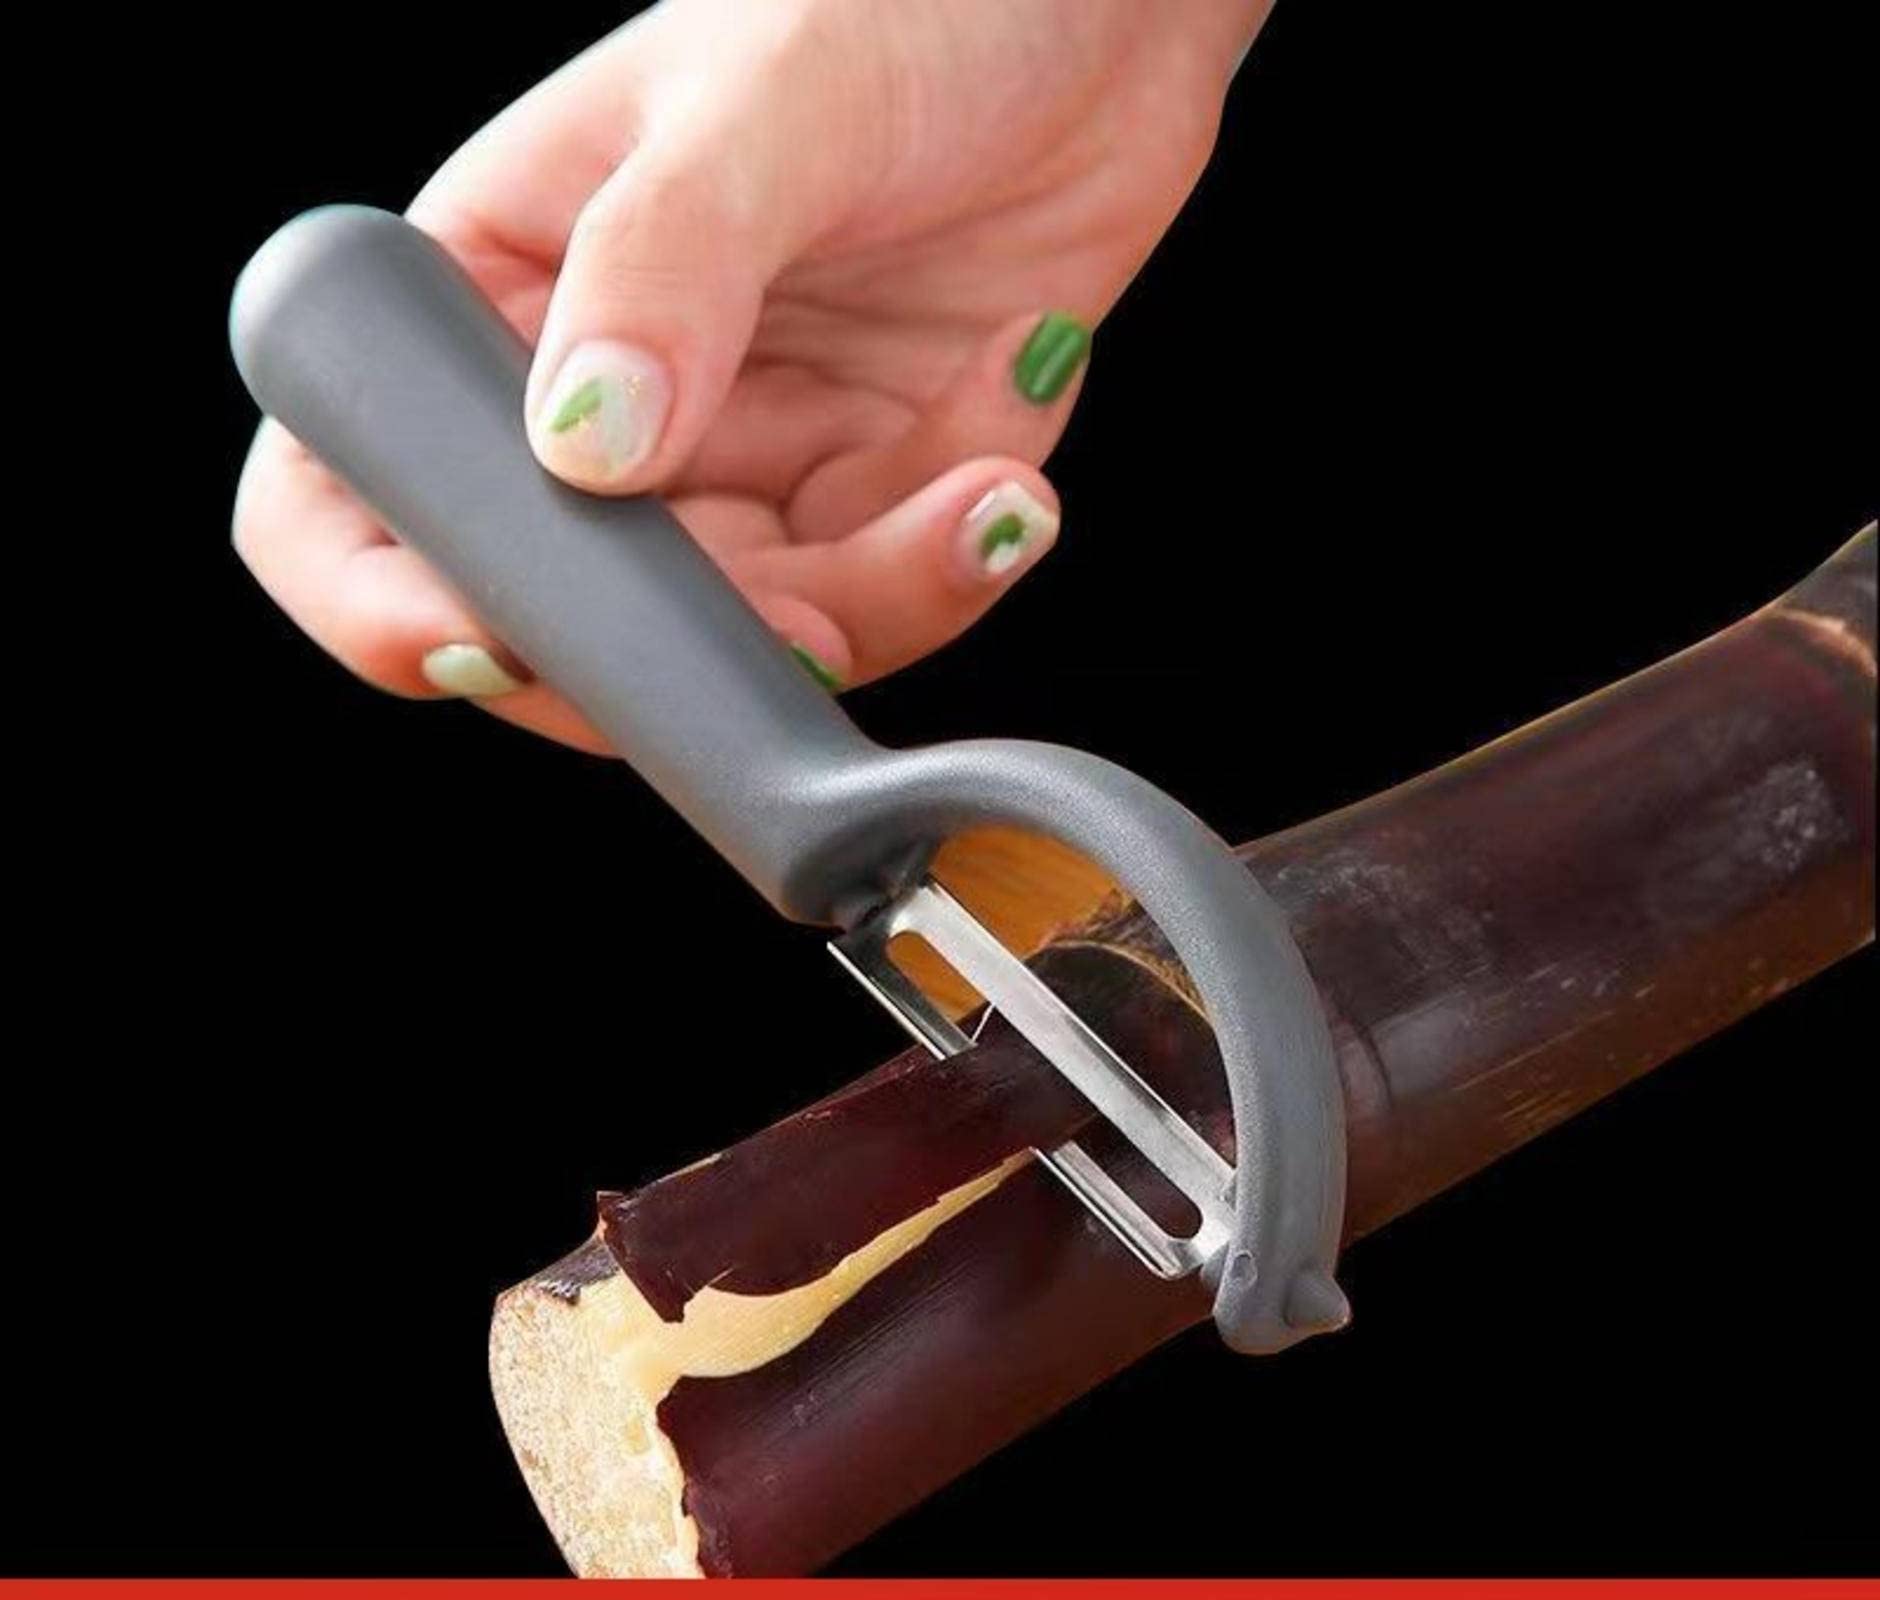 New beam knife peeler stainless steel fruit peeler vegetable kitchen multi-function potato peel fabulous peeling gadget